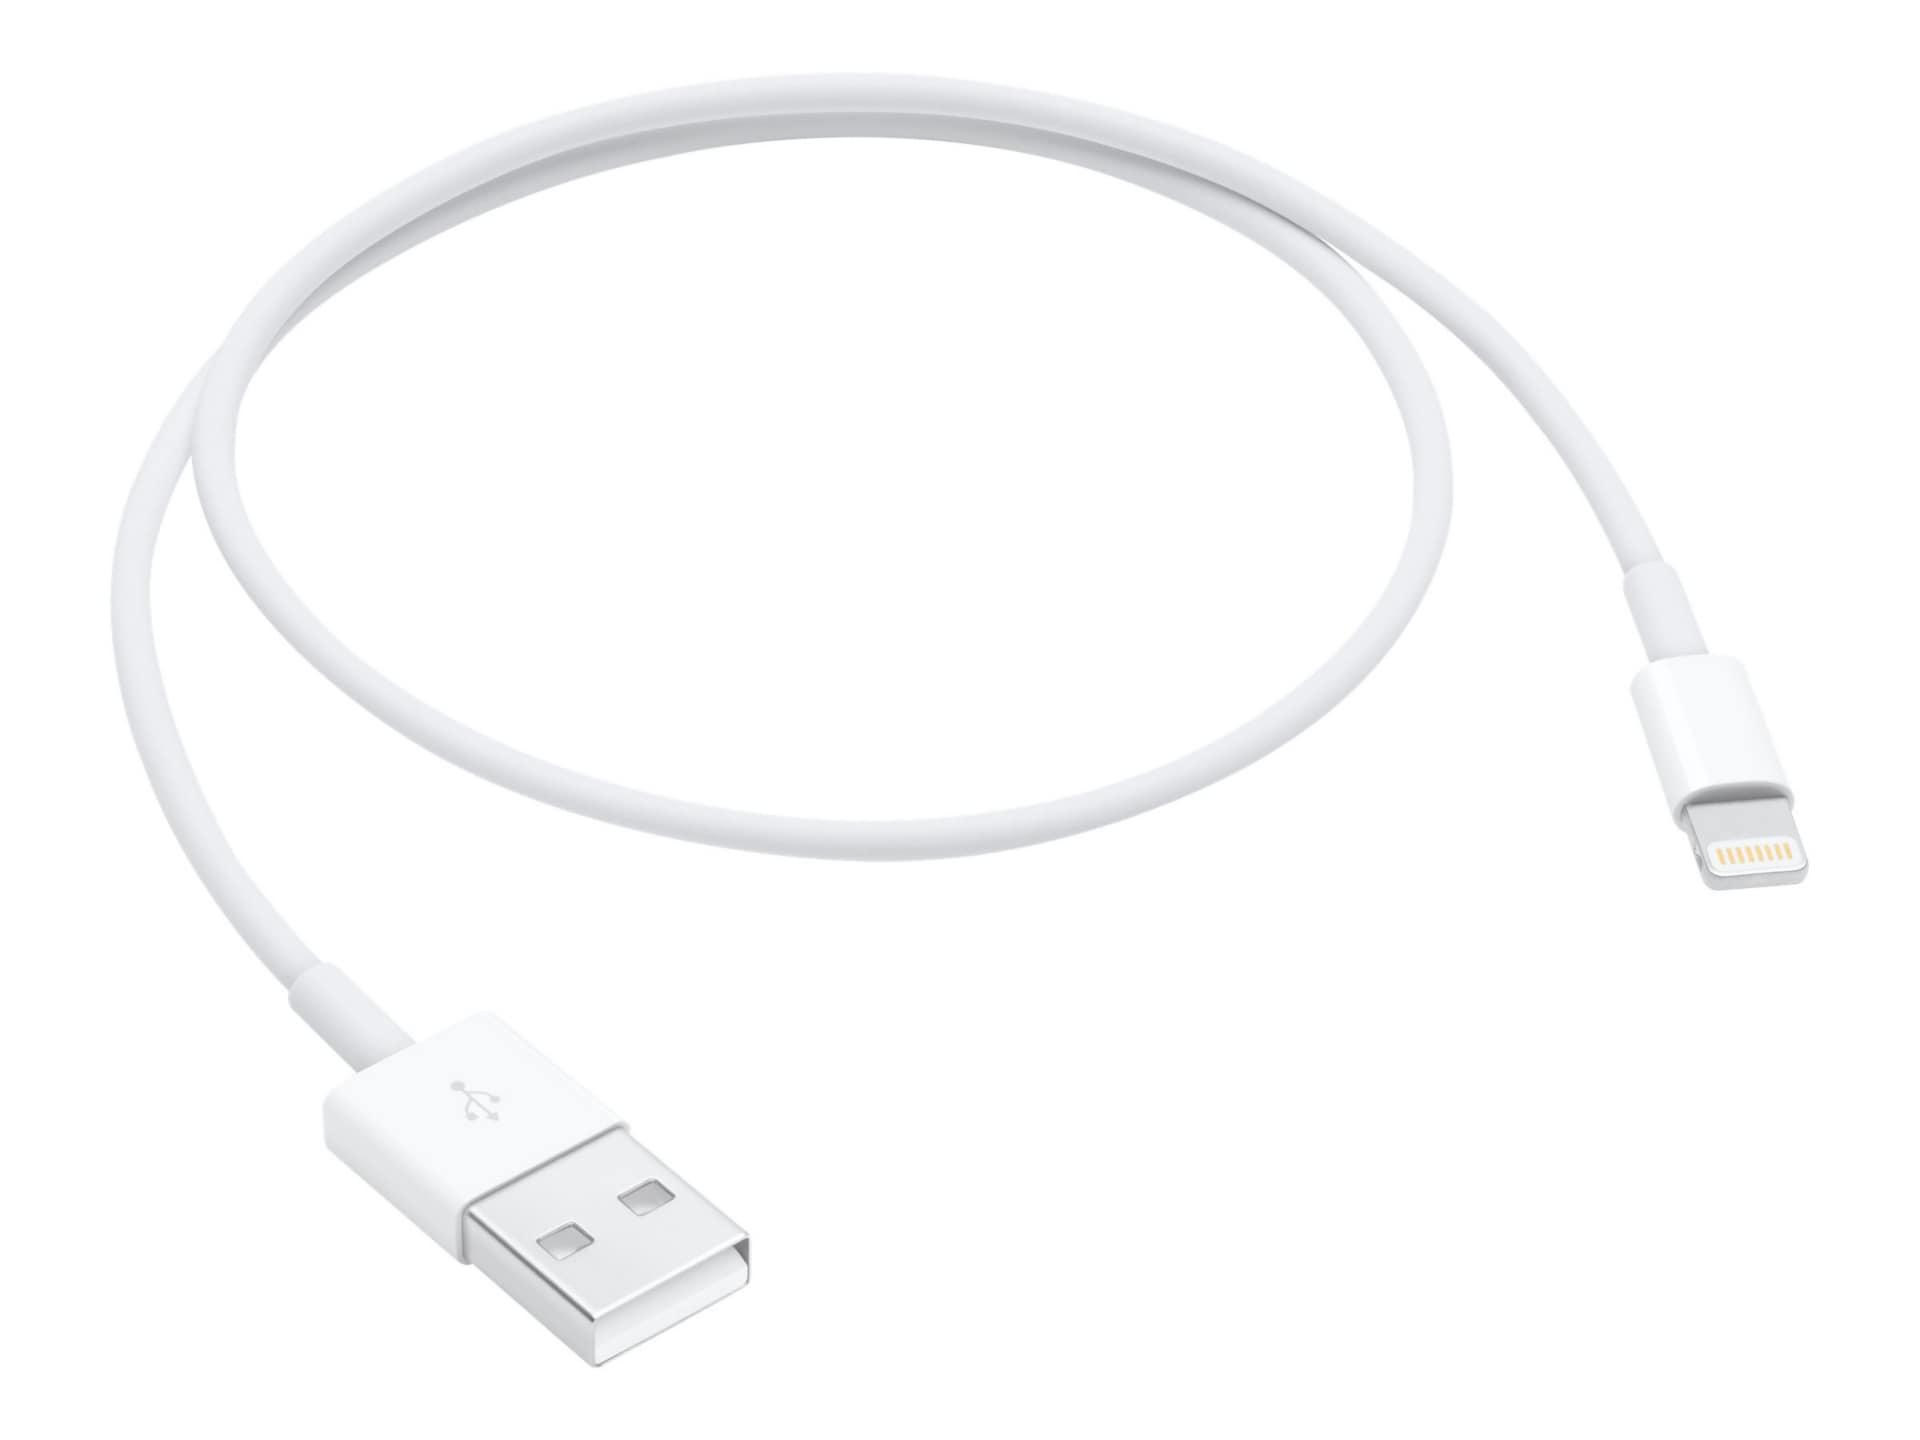 Apple Lightning cable - Lightning / USB 2.0 - 50 cm